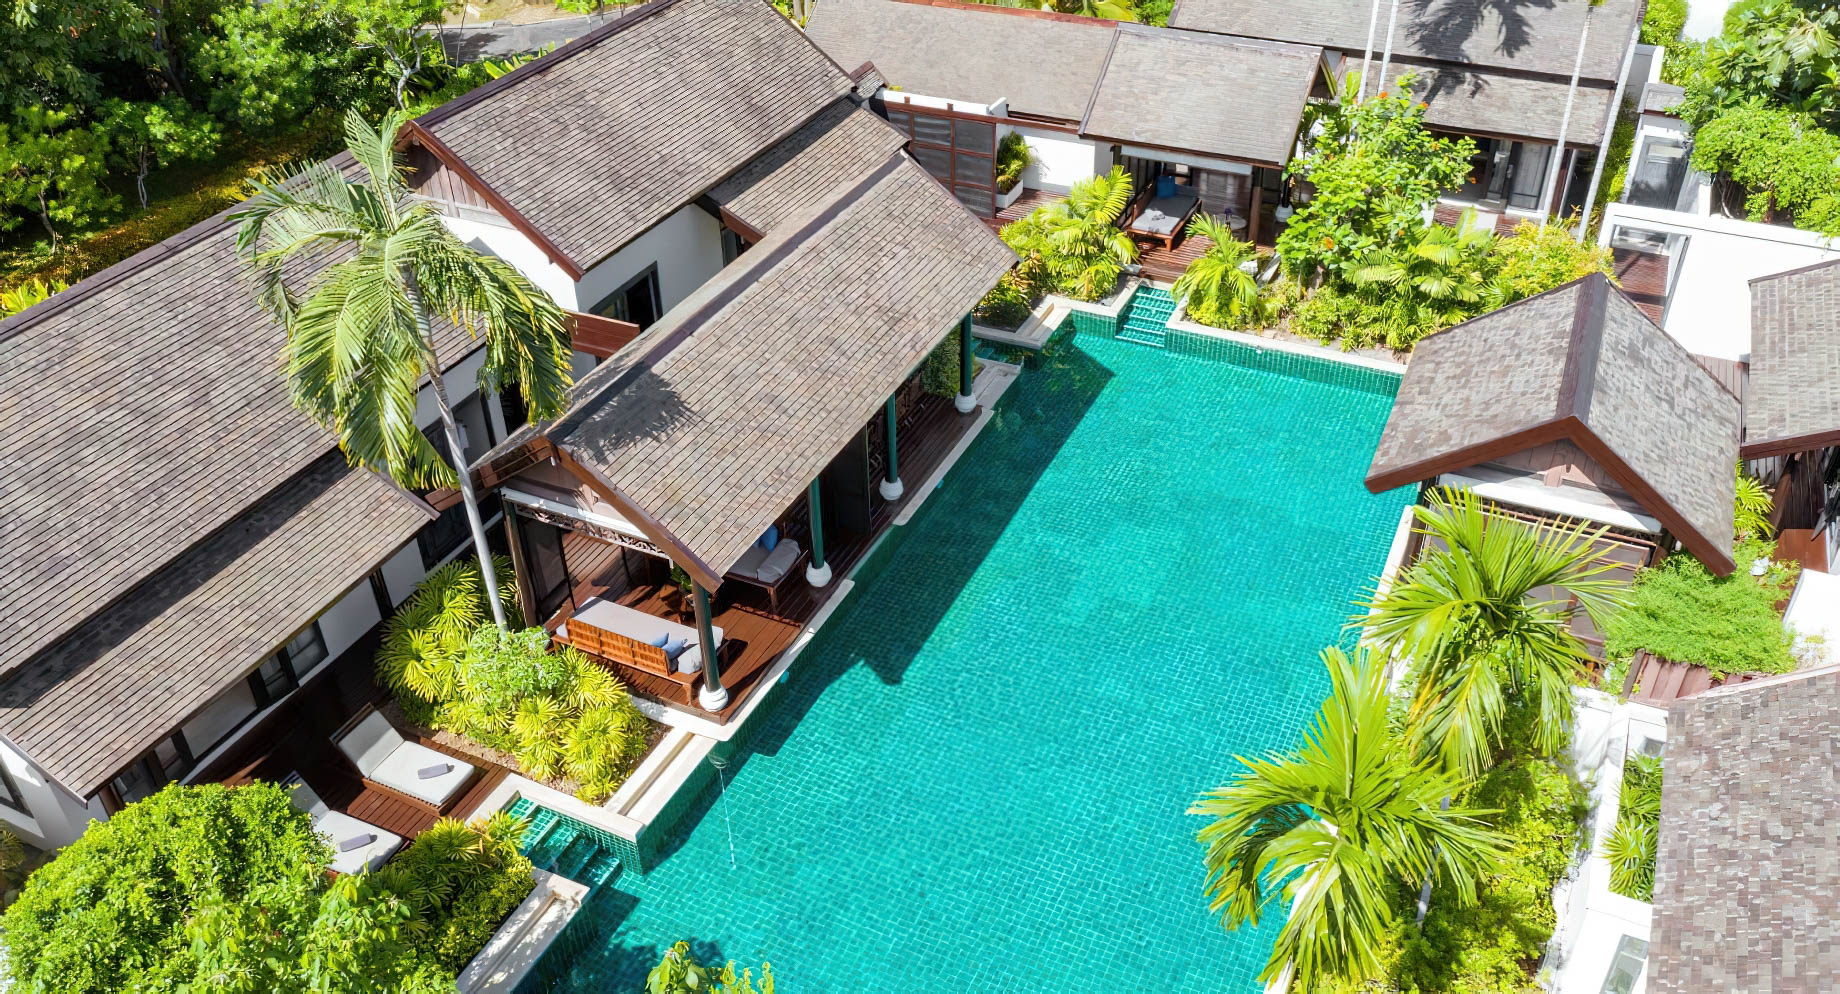 Anantara Lawana Koh Samui Resort – Thailand – Four Bedroom Lawana Residence